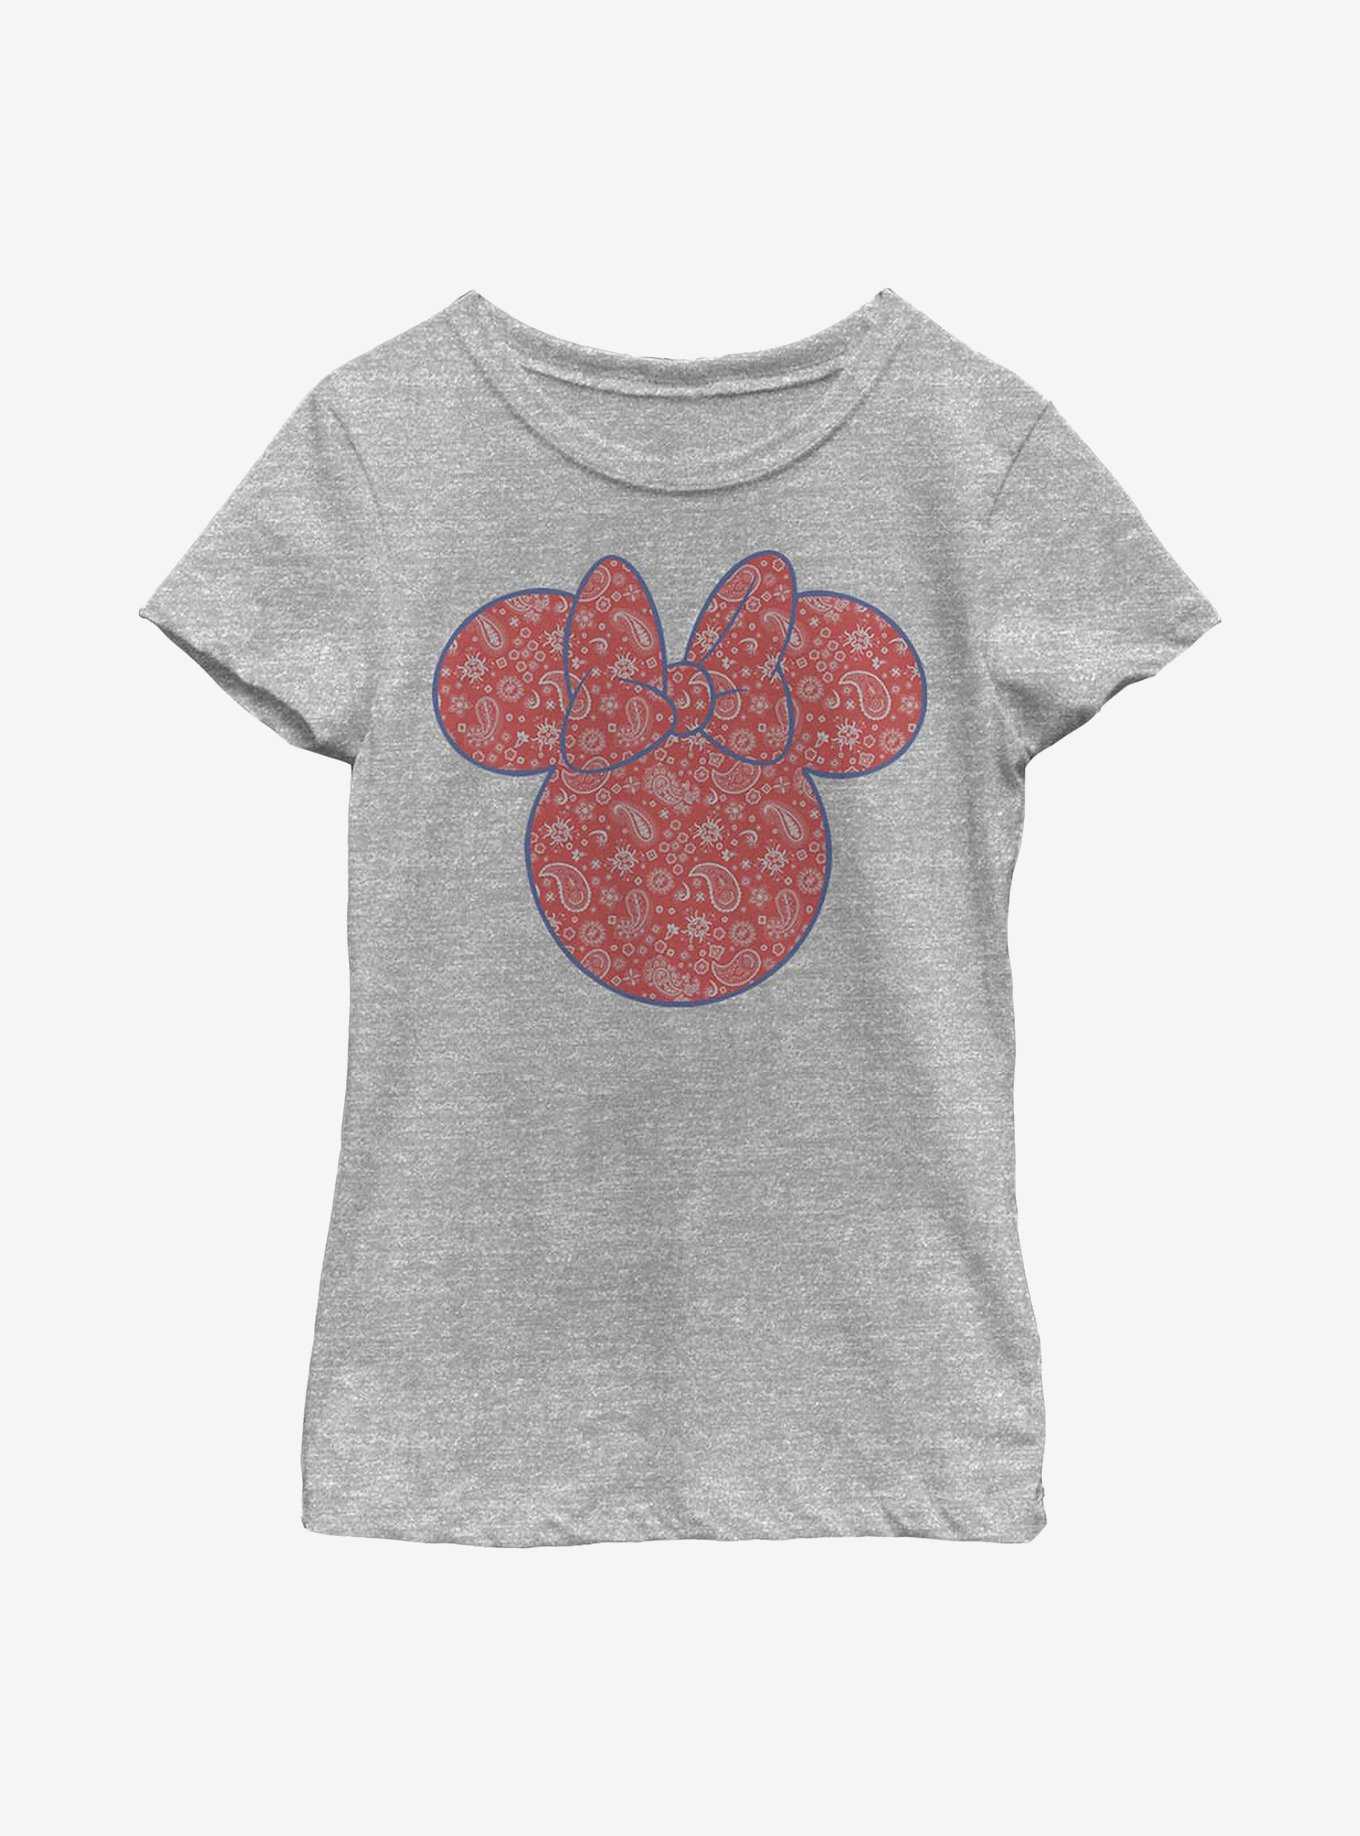 Disney Minnie Mouse Americana Paisley Youth Girls T-Shirt, , hi-res